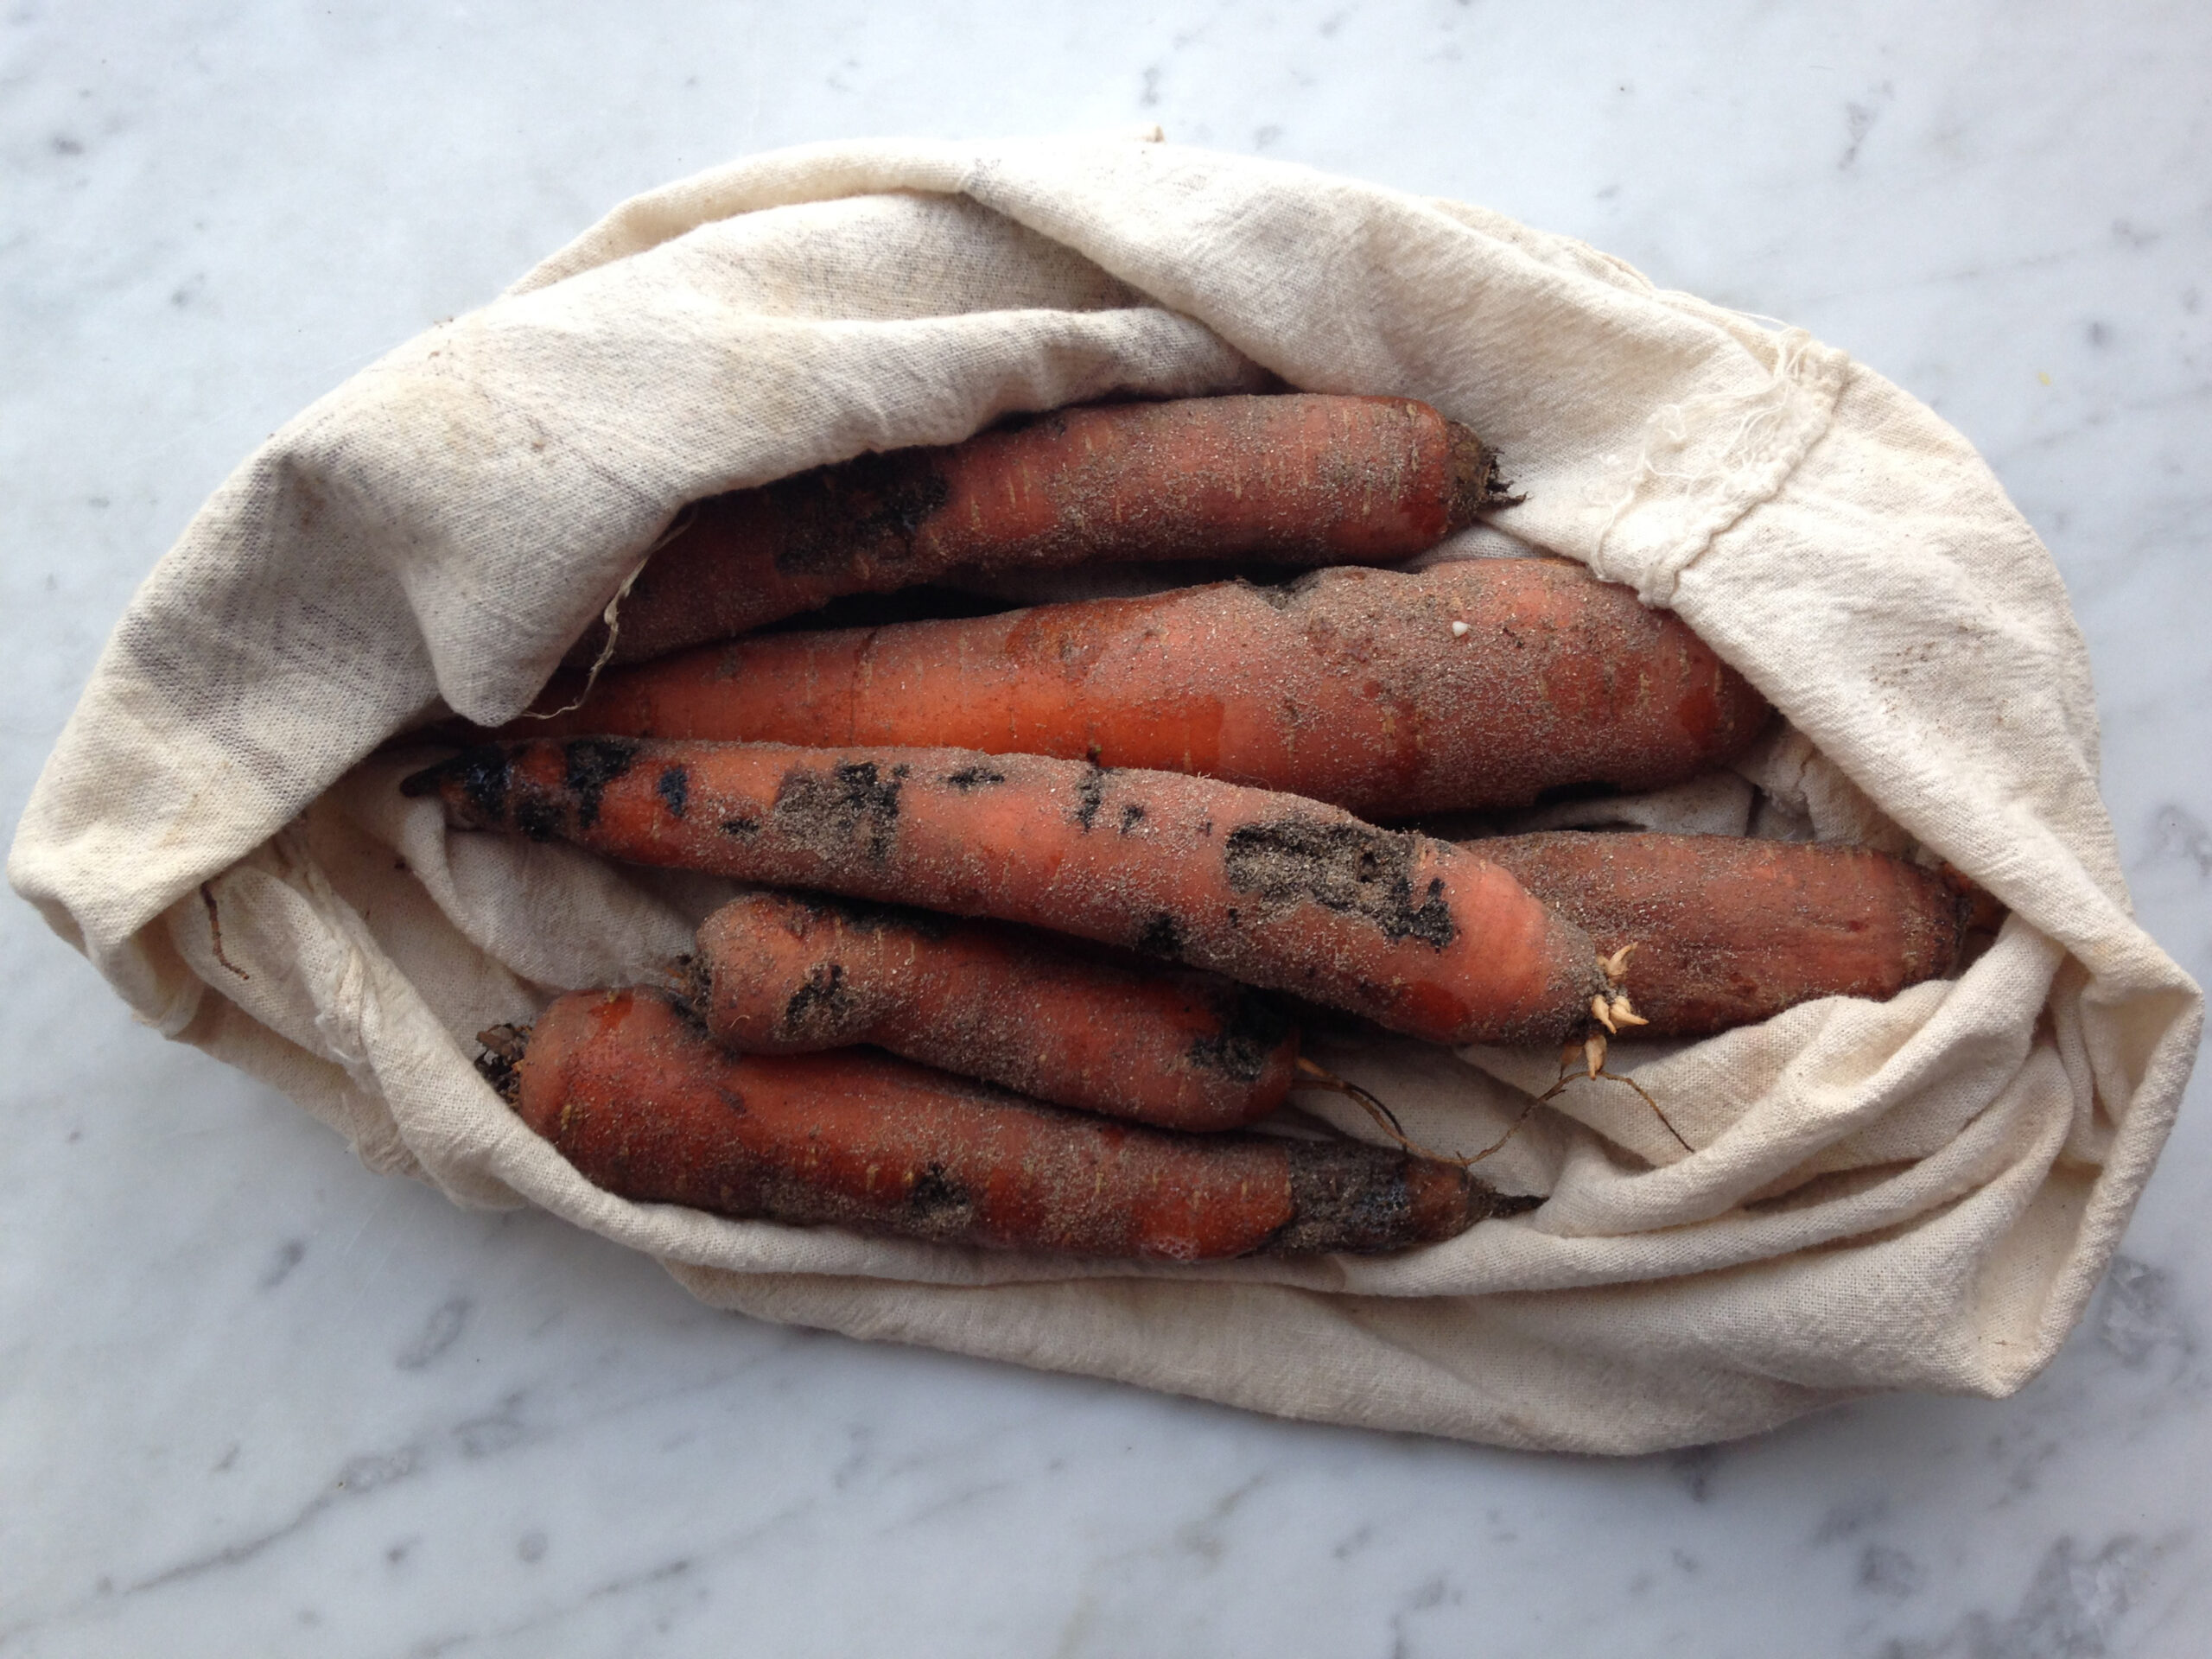 Week 9: Merci et adieu aux carottes!